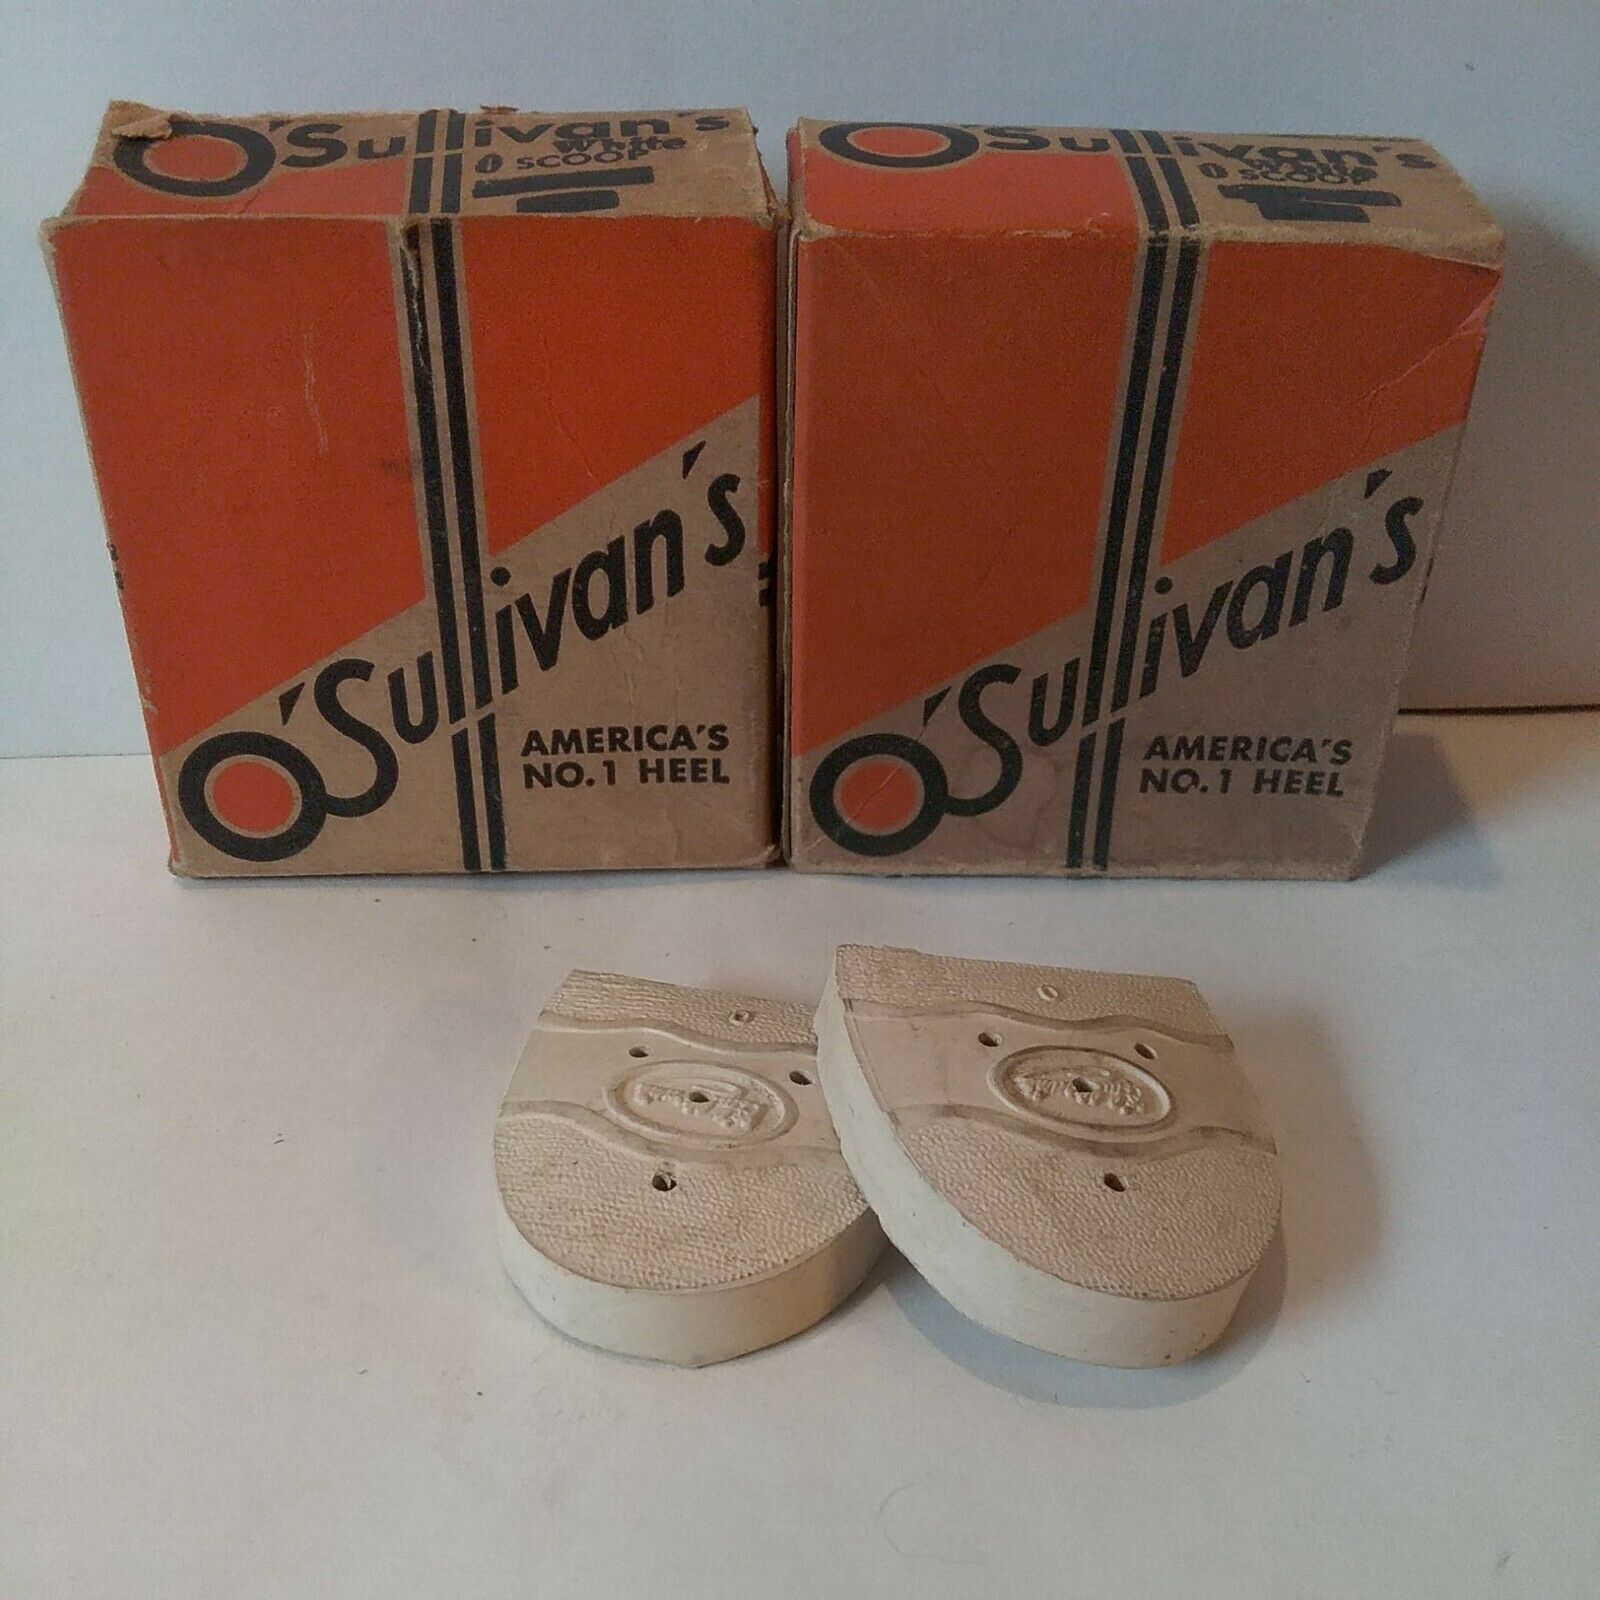 Vintage O'Sullivan's Heel White 0 Scoop America's NO.1 Heel 2 Pairs